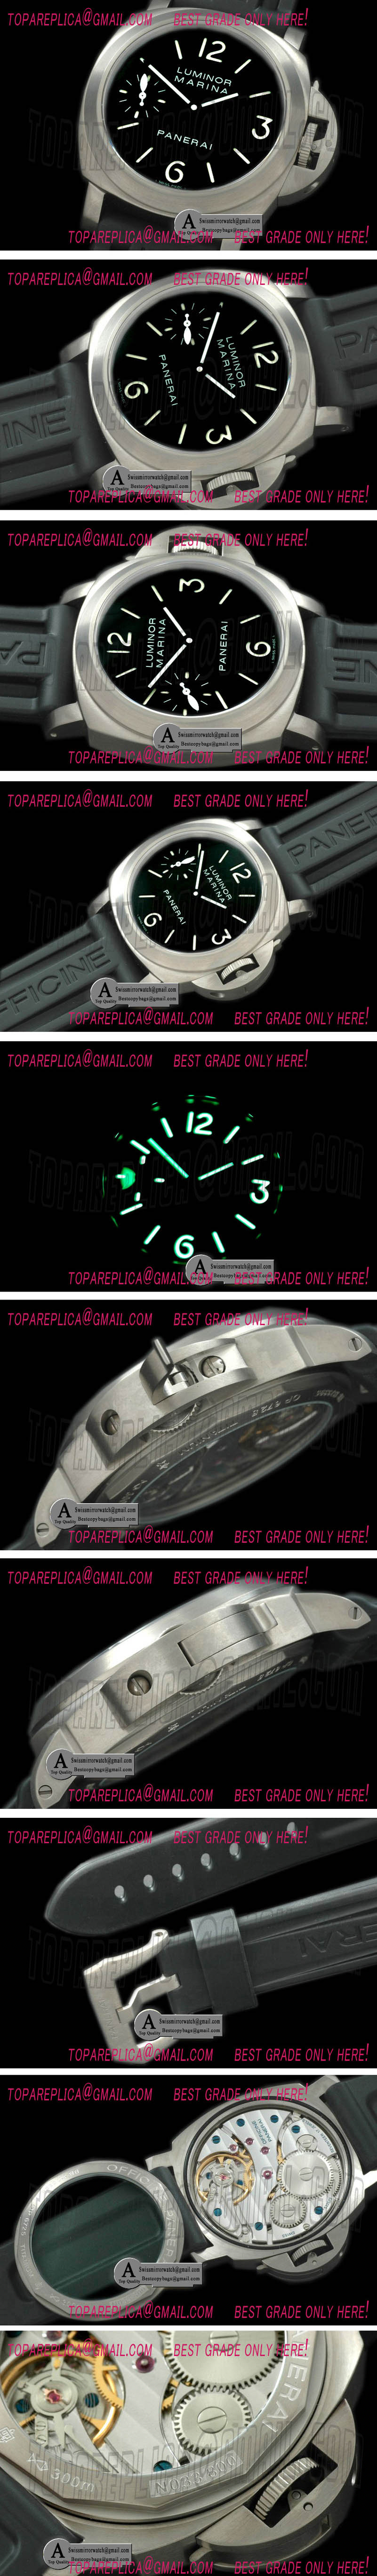 Panerai Pam 177 N Titanium/Rubber Black Asia 6497 Replica Watches